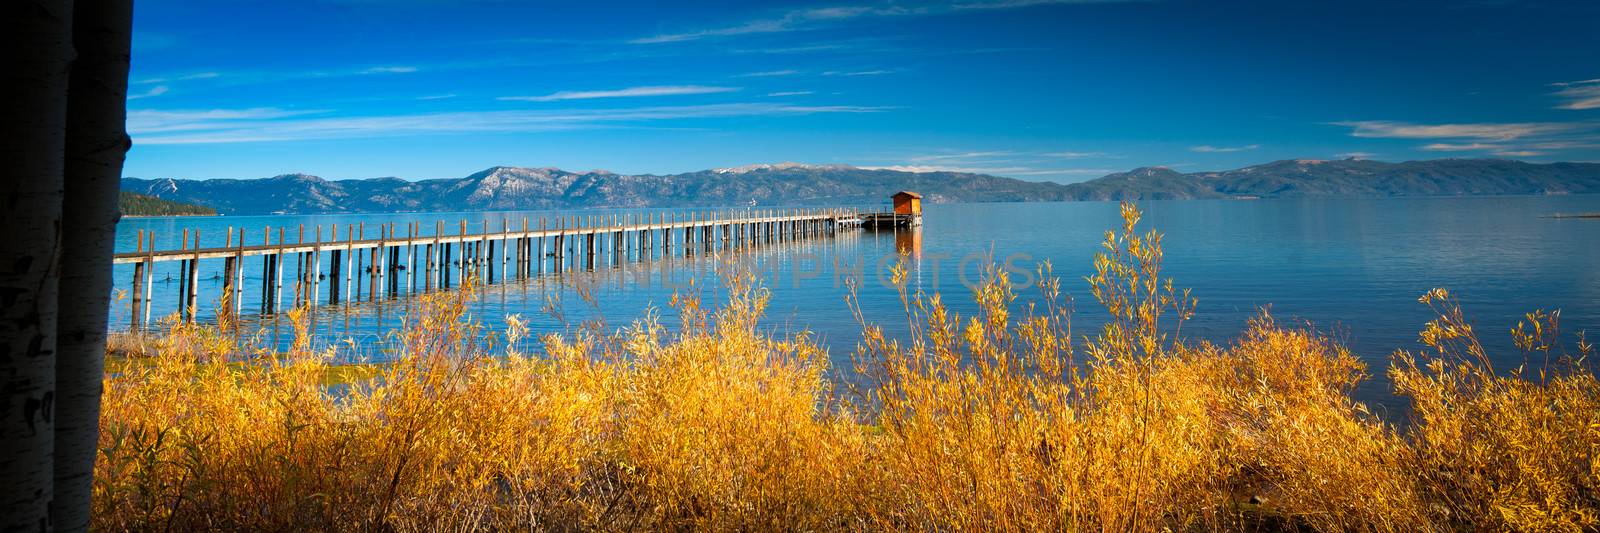 Pier in a lake, Tahoe City, Lake Tahoe, California, USA